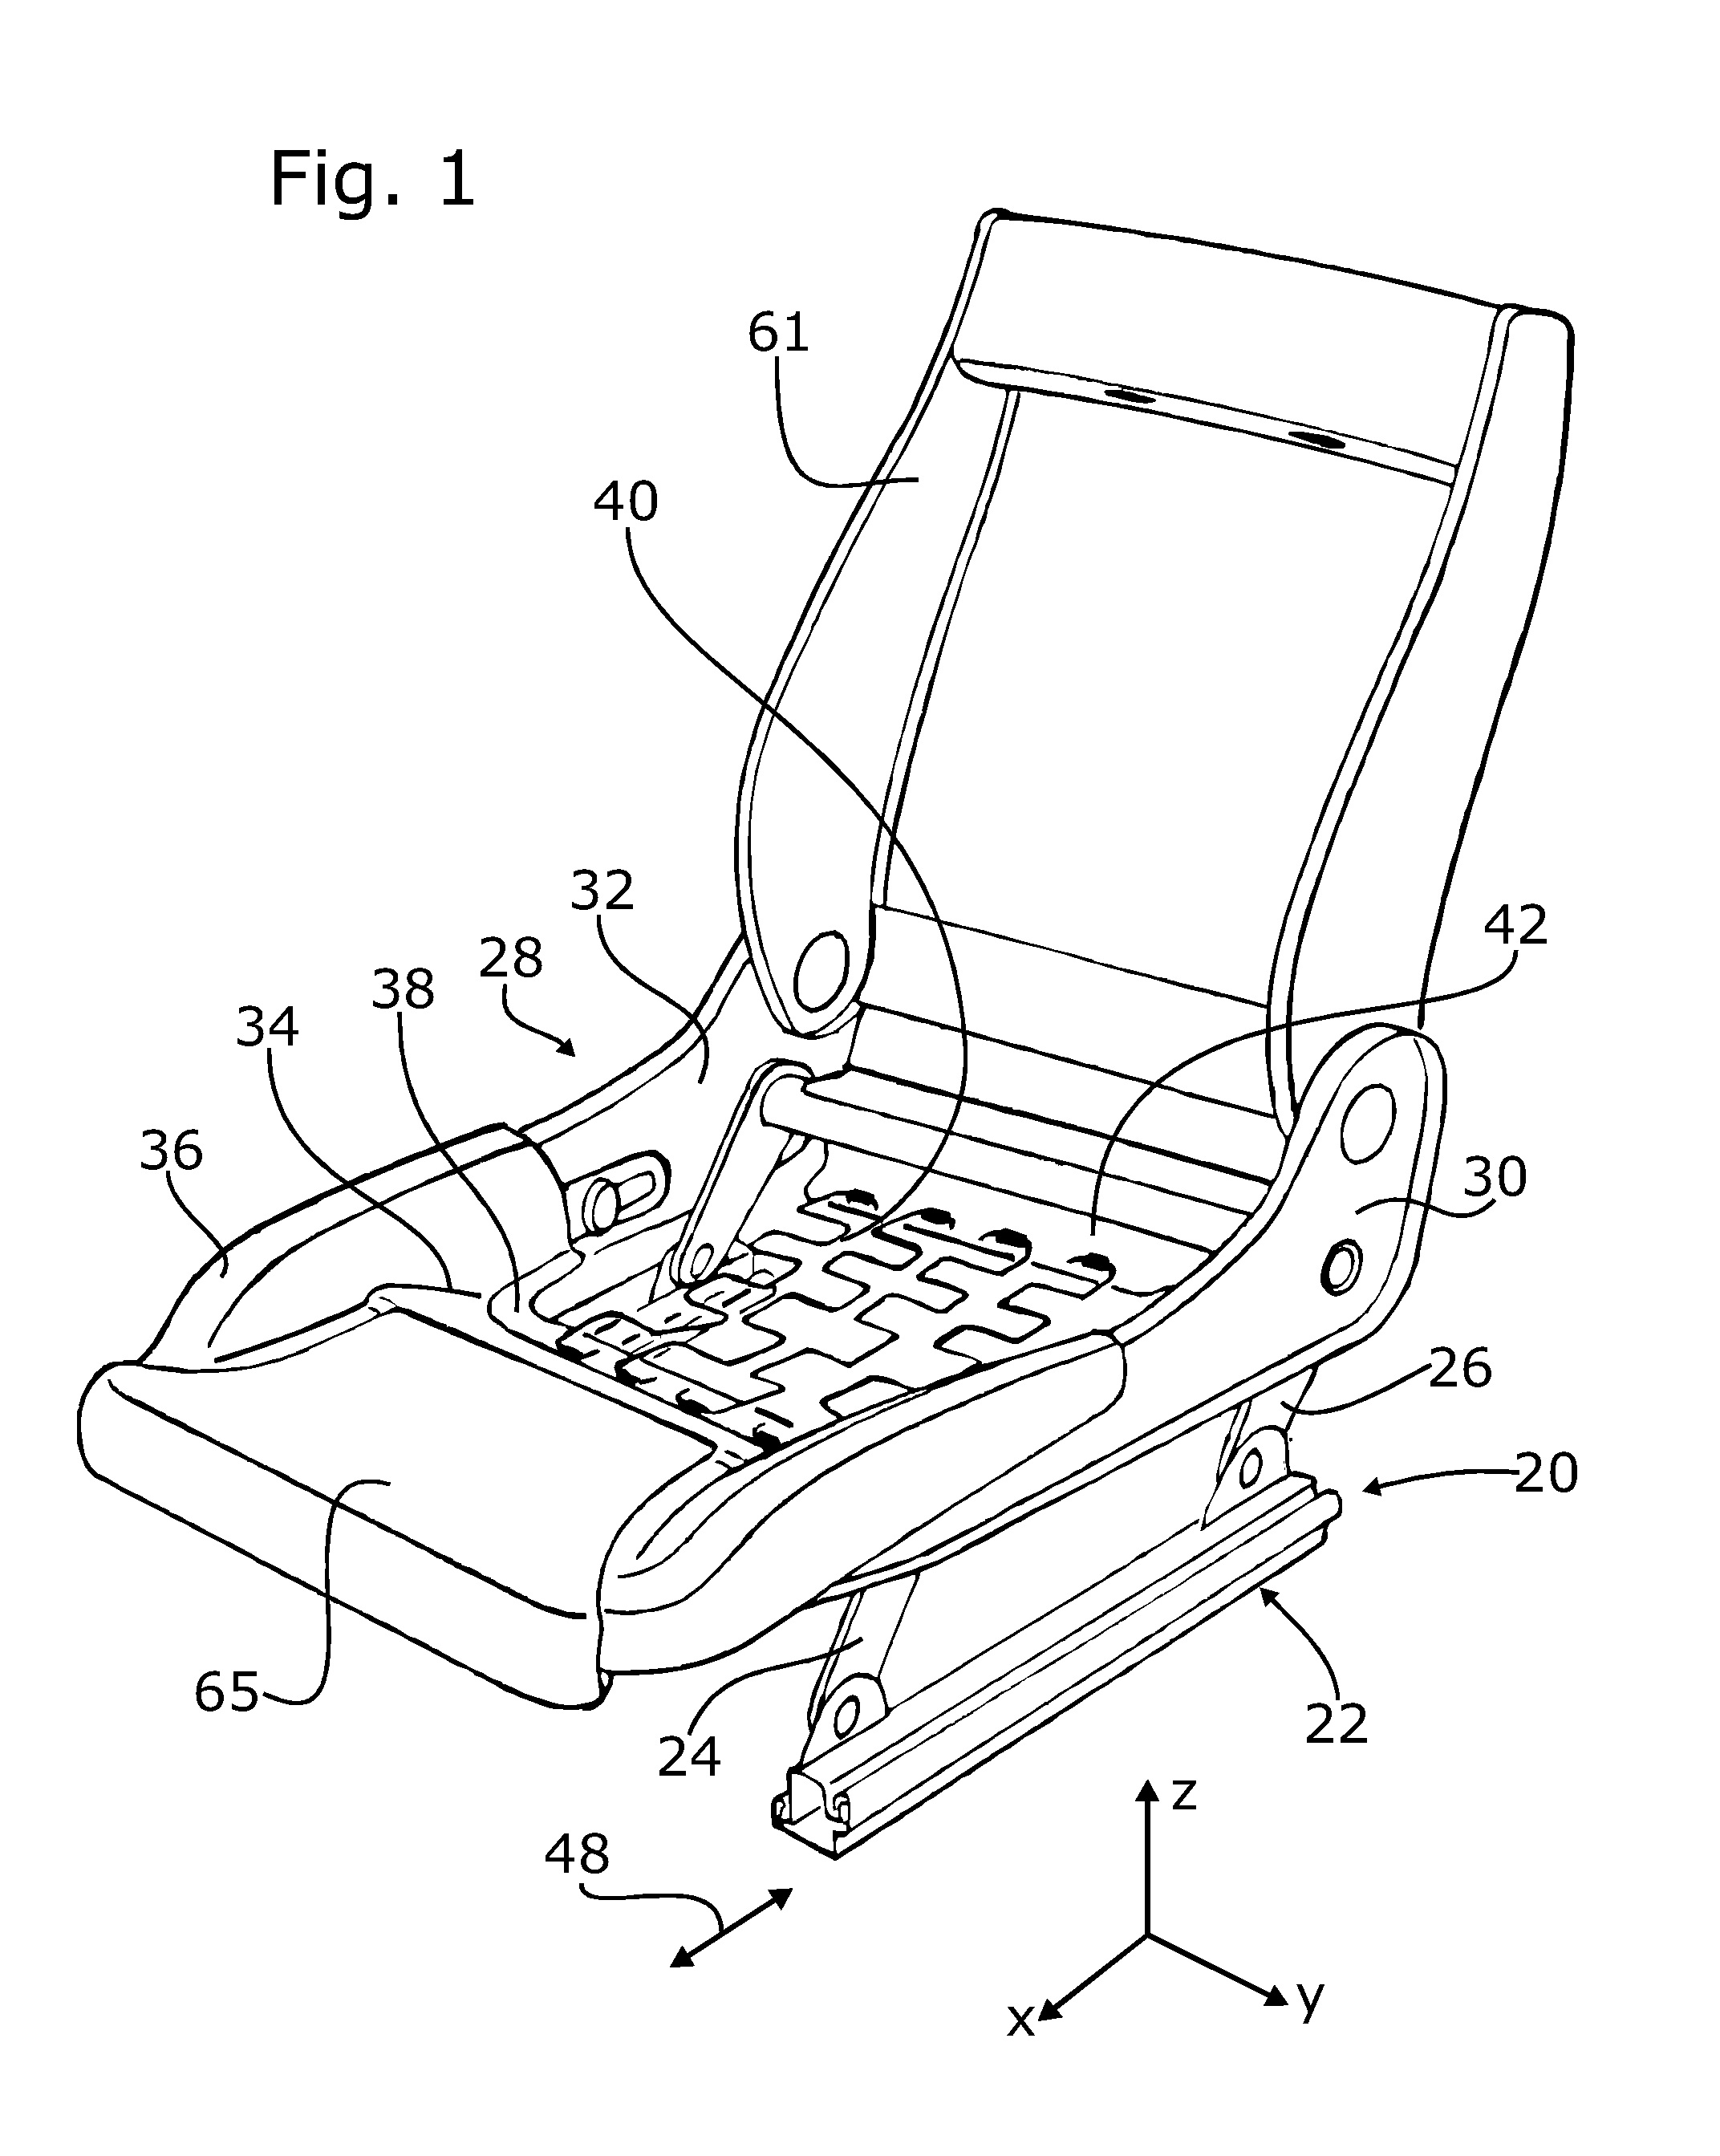 Motor Vehicle Seat with Seat Depth Adjustment